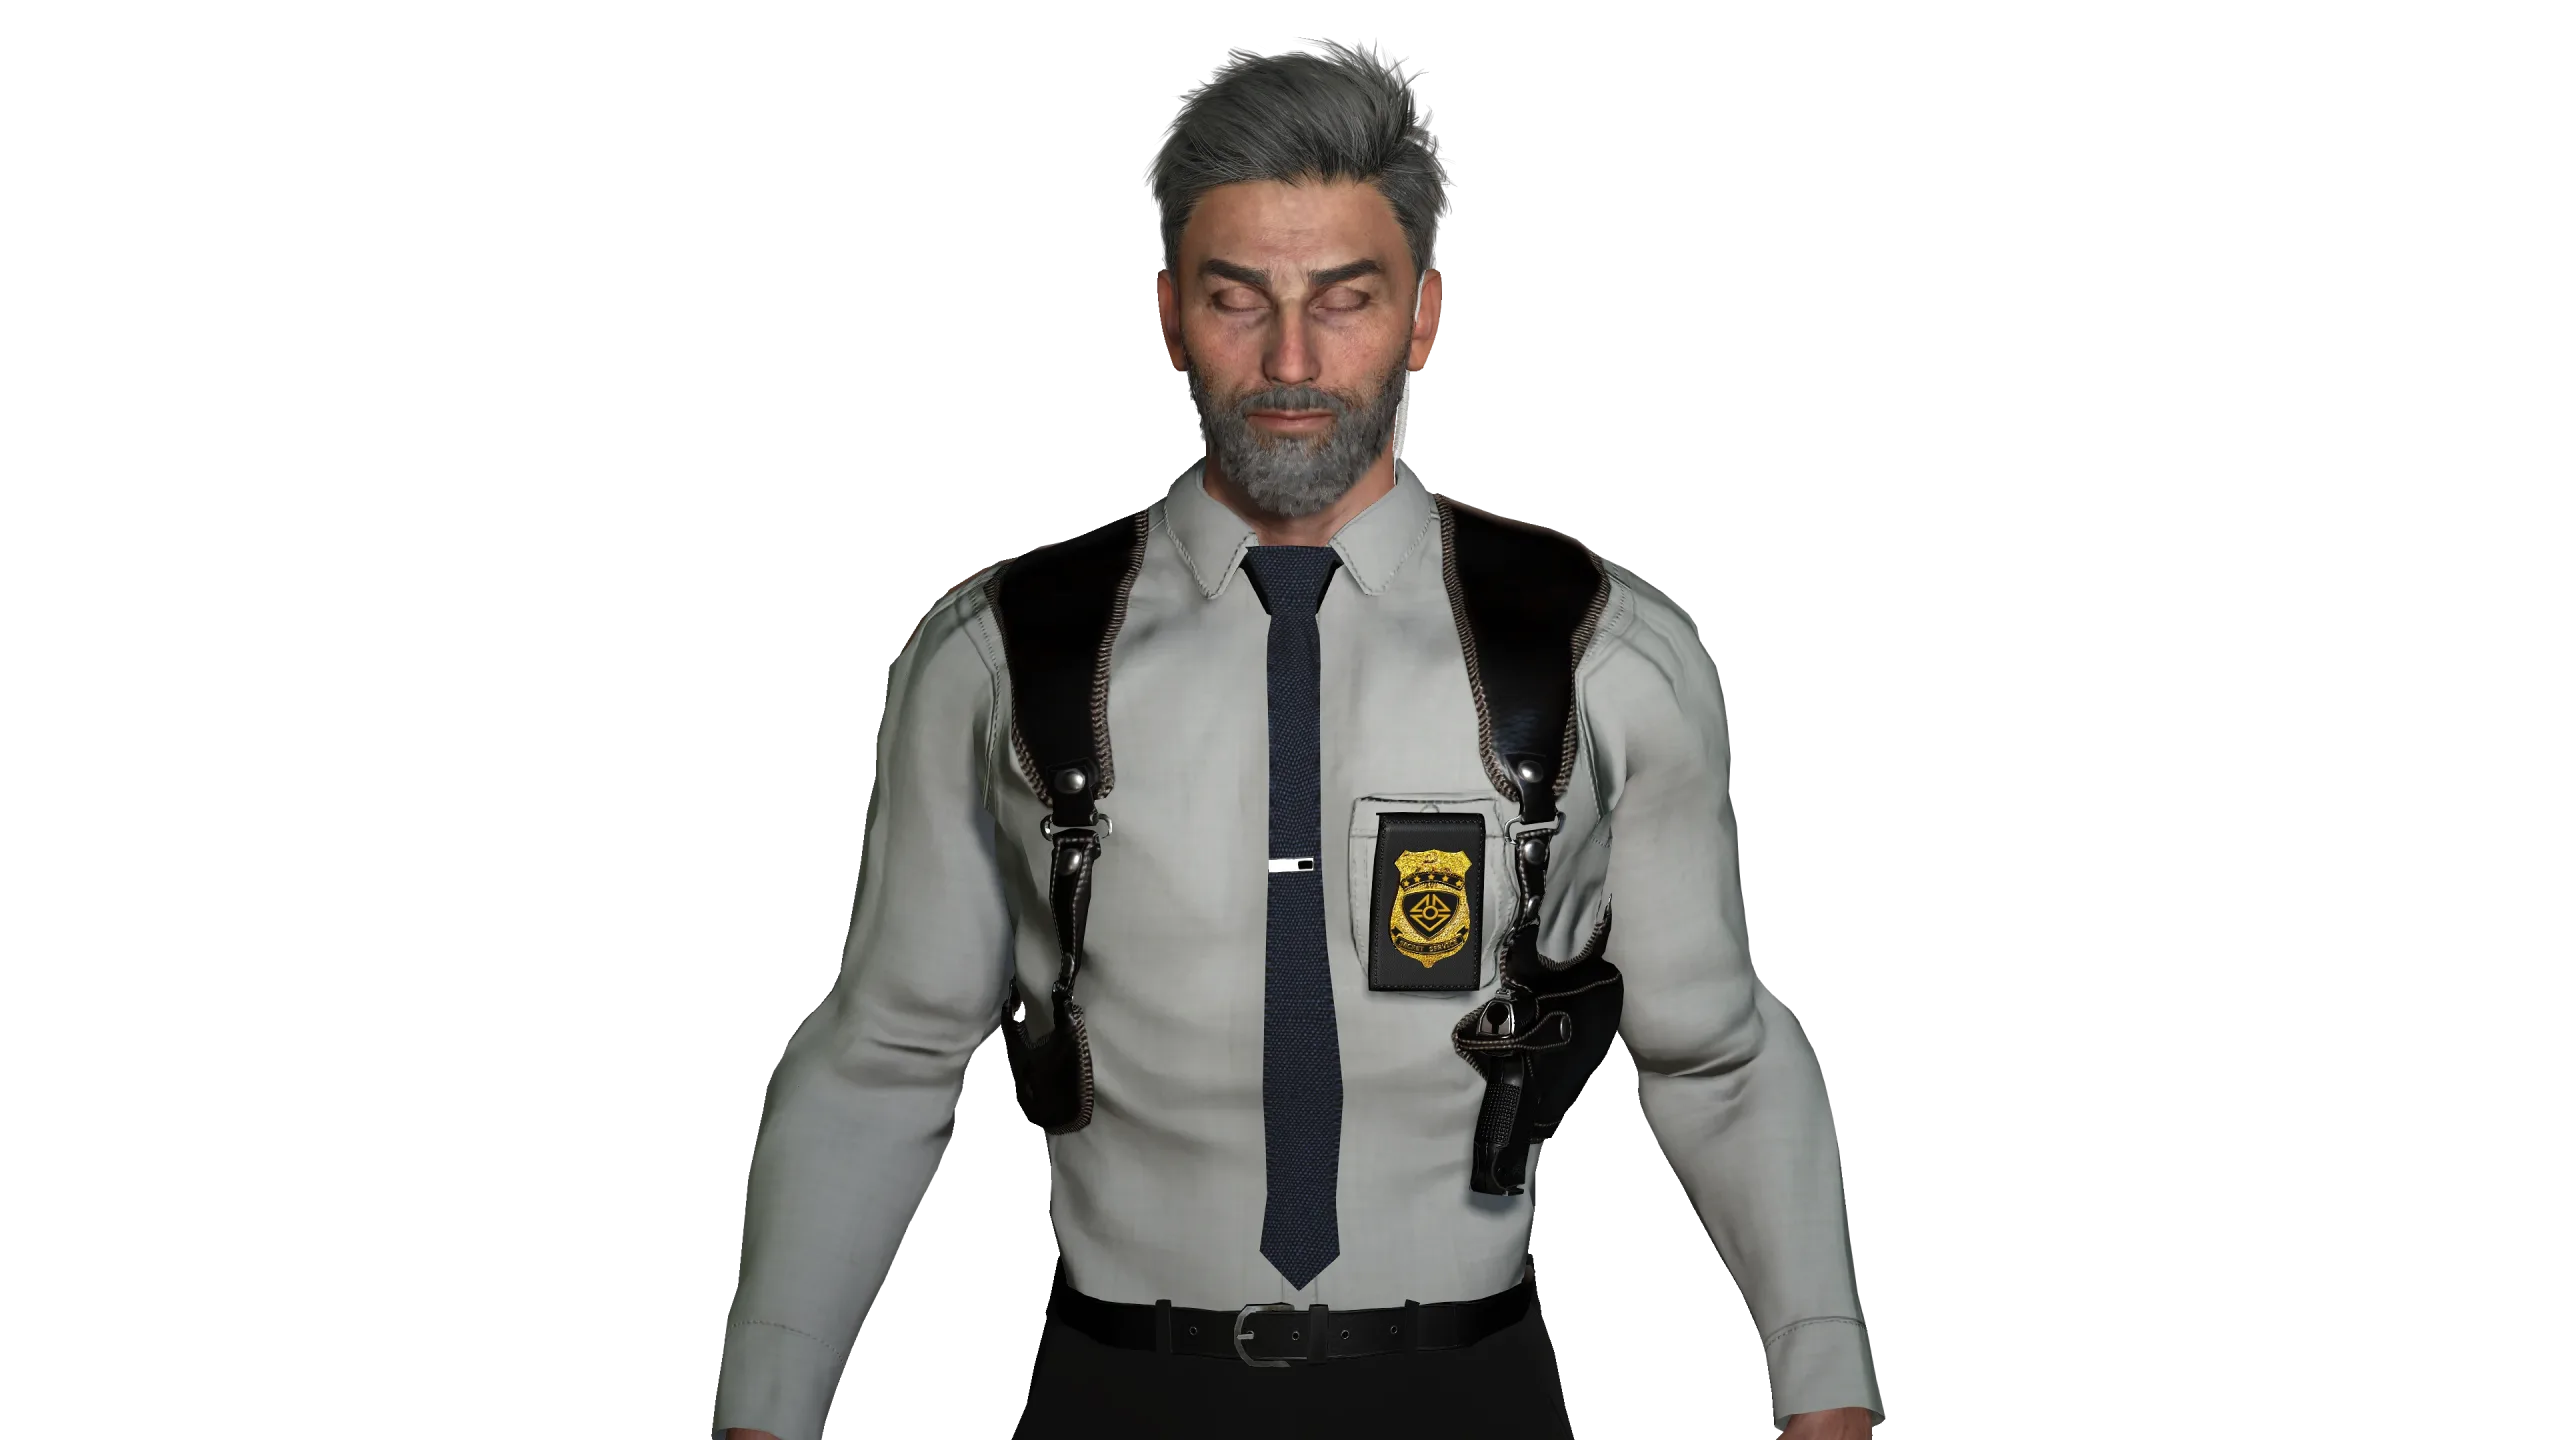 AAA 3D REALISTIC HUMAN CHARACTER - POLICEMAN AND POLICEWOMAN